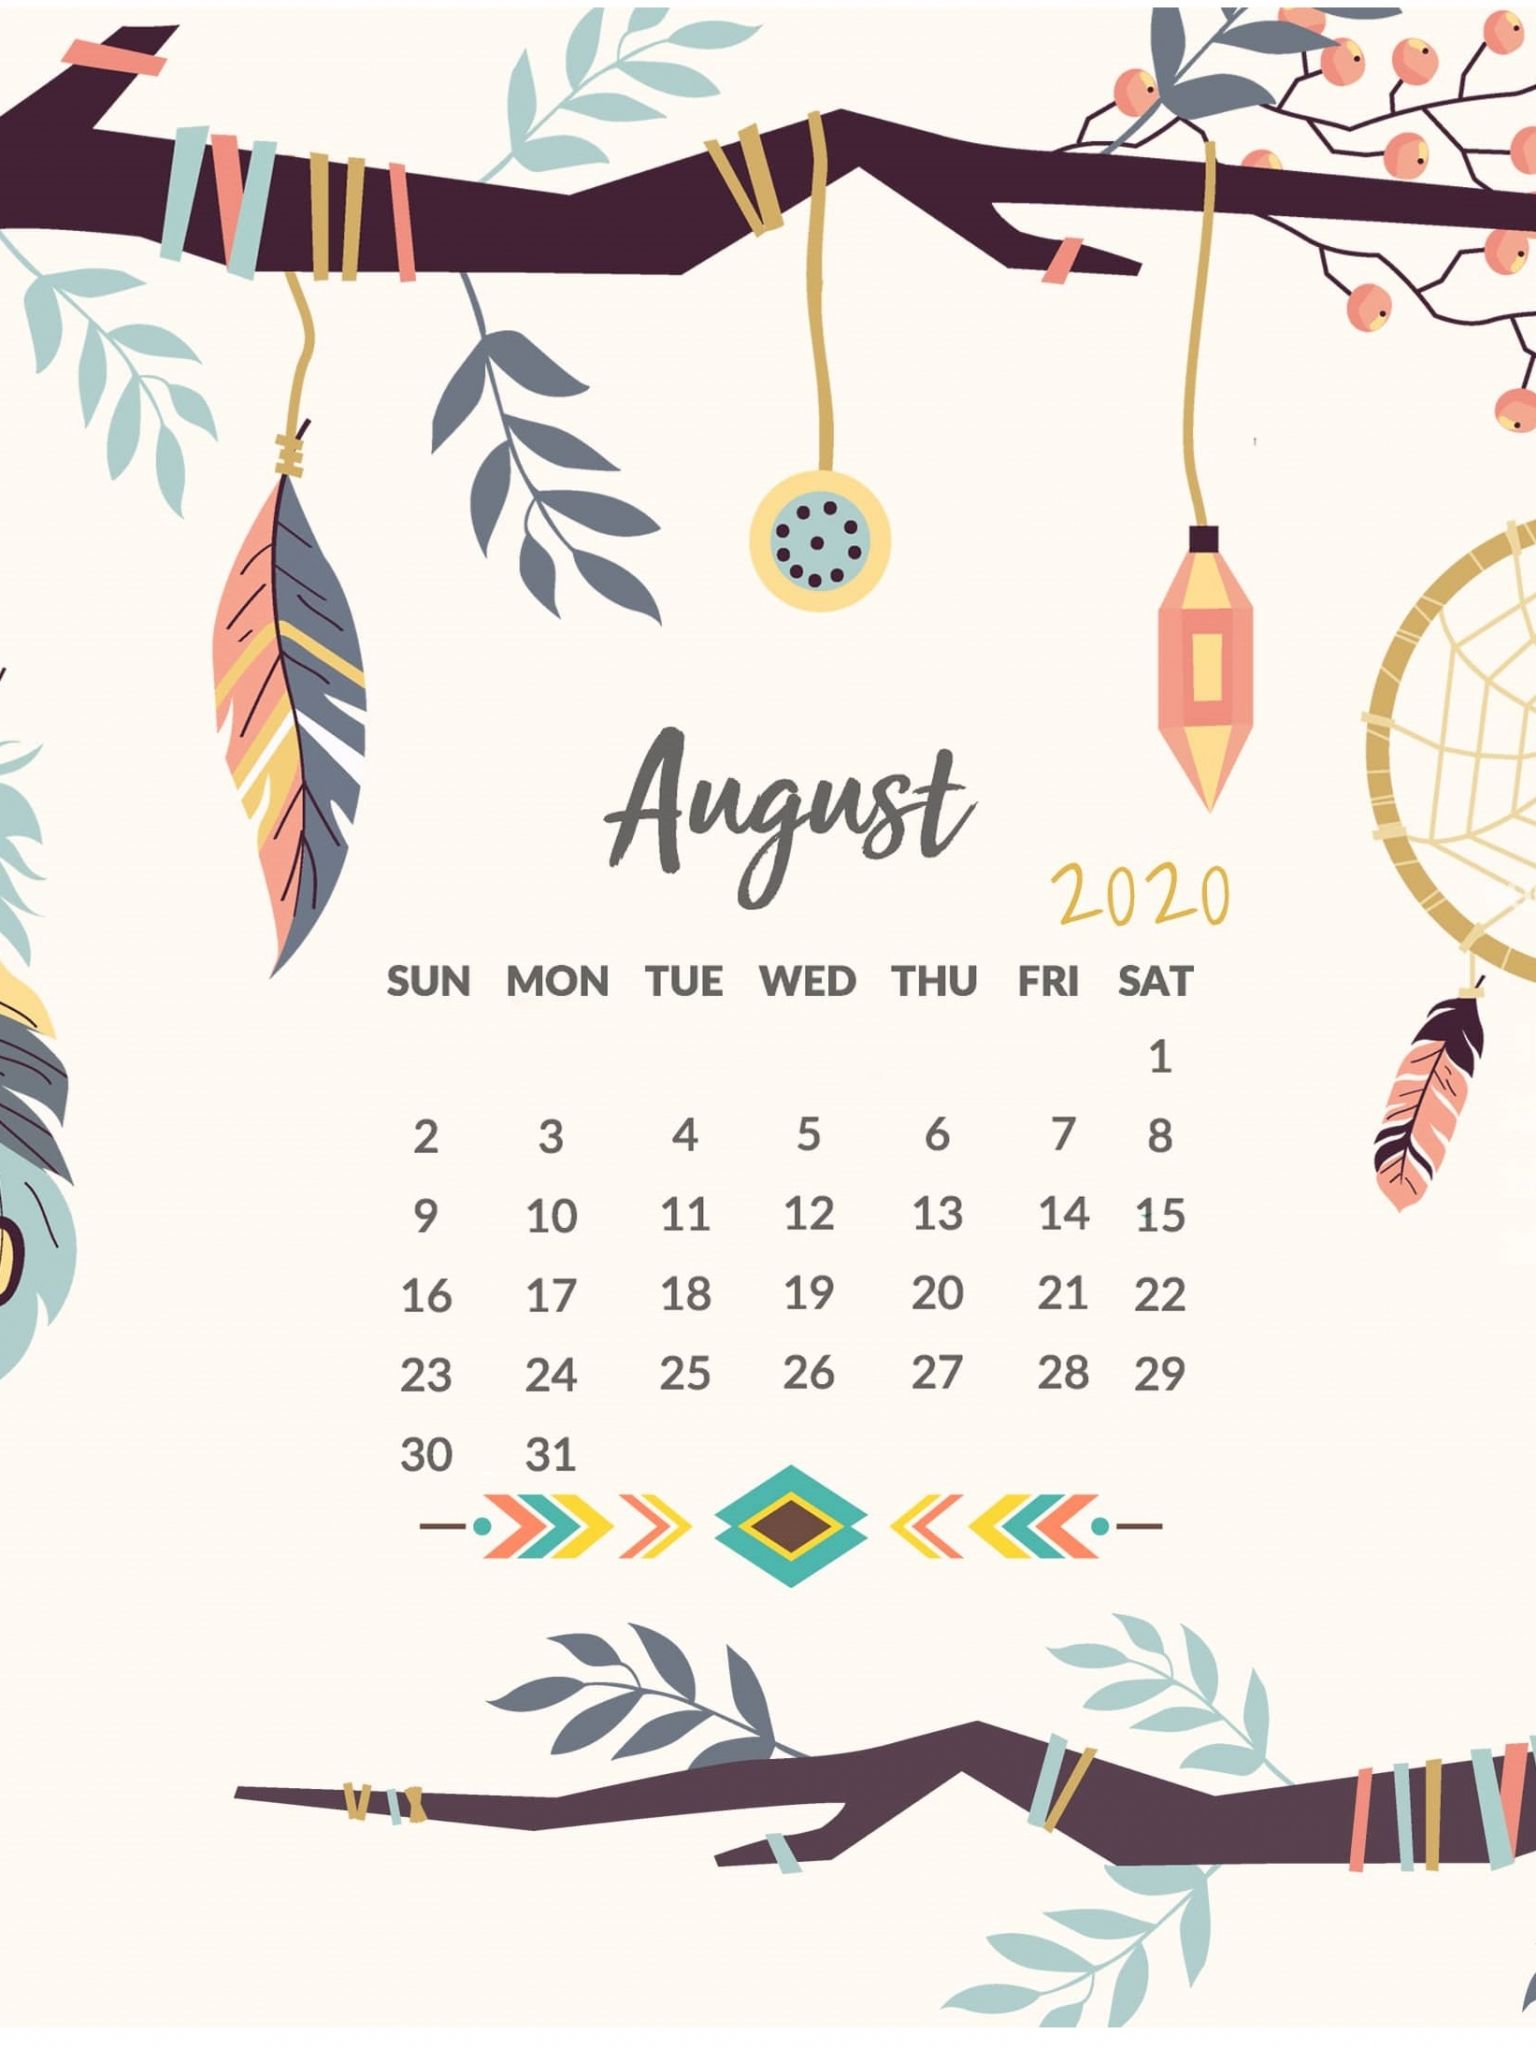 Free Printable August 2020 Desktop Calendar Wallpaper in 2020